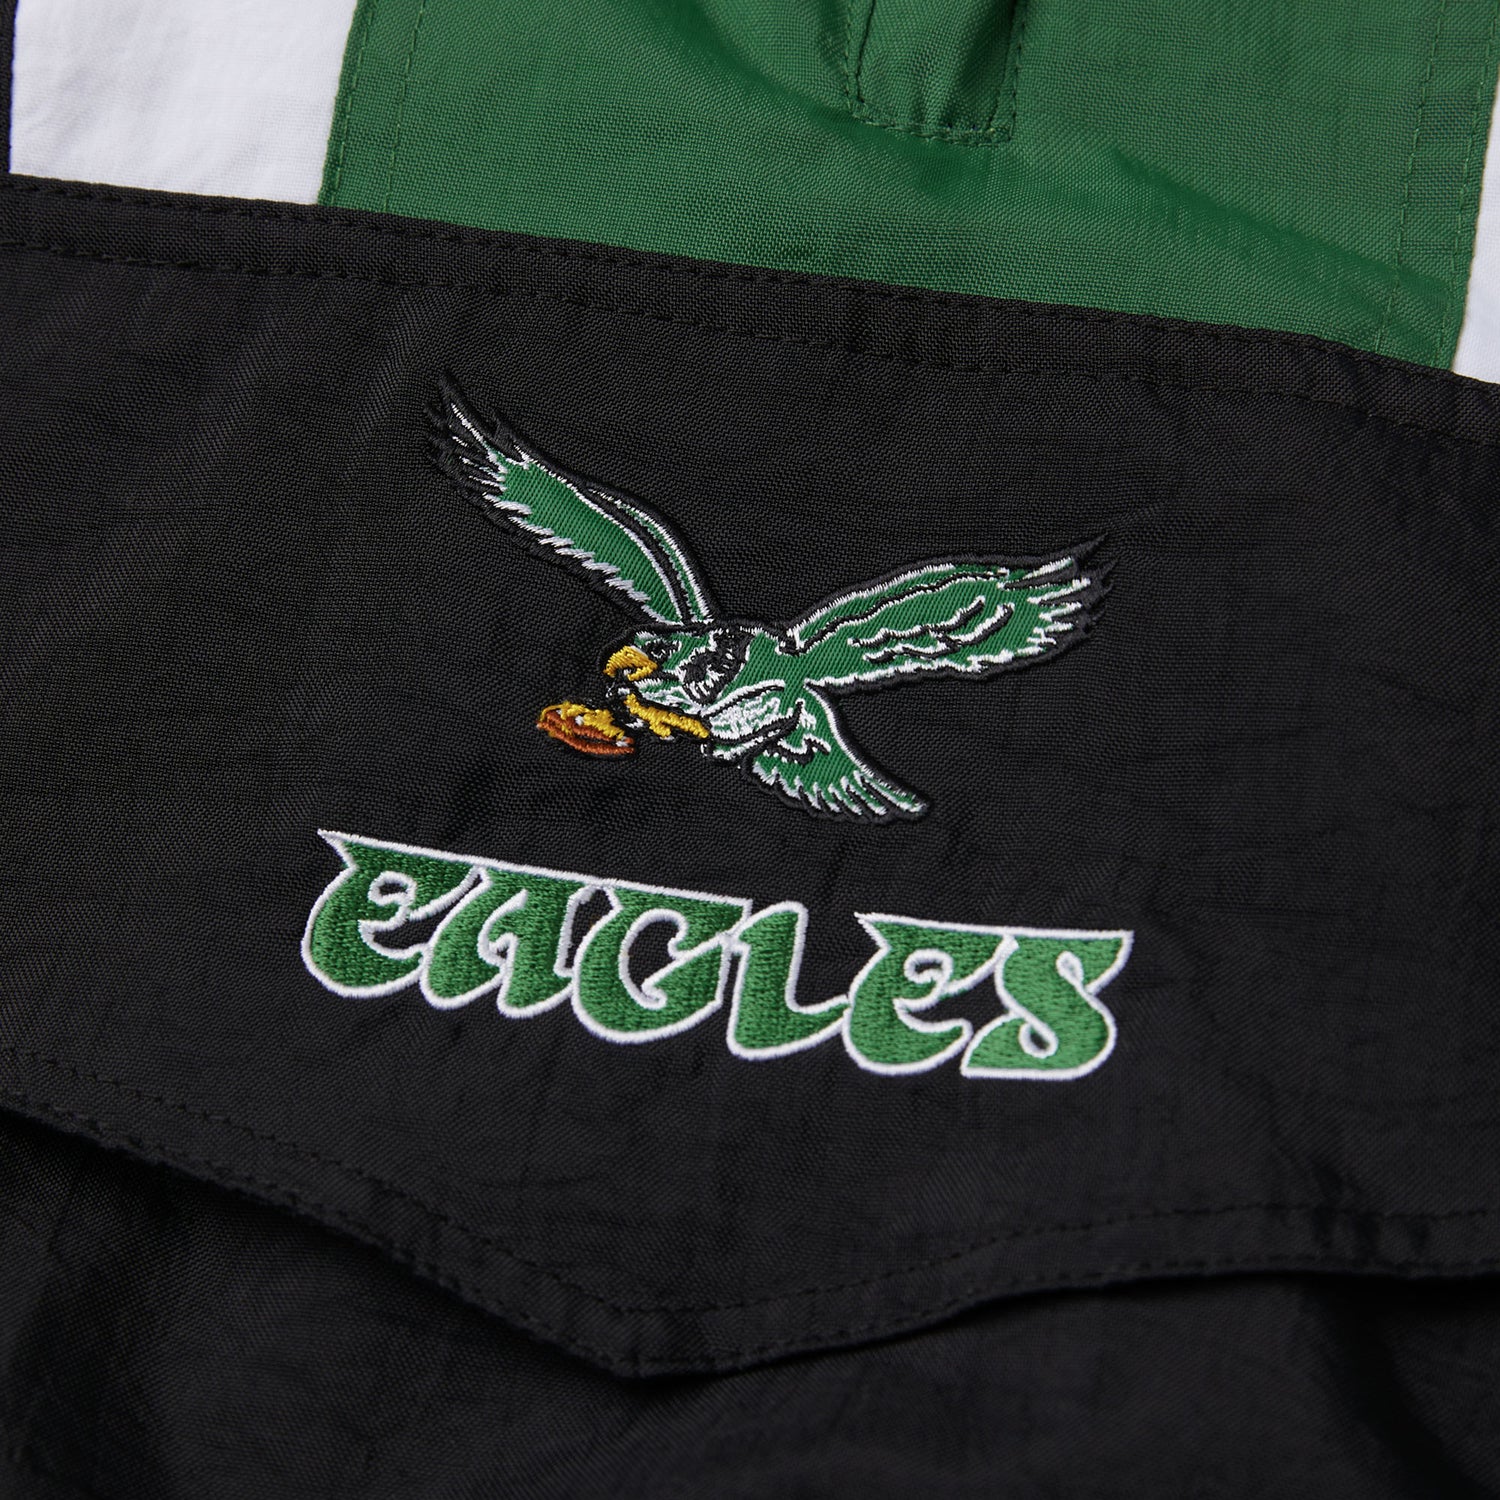 Men's Starter White Philadelphia Eagles Retro Graphic Pullover Hoodie Size: Small